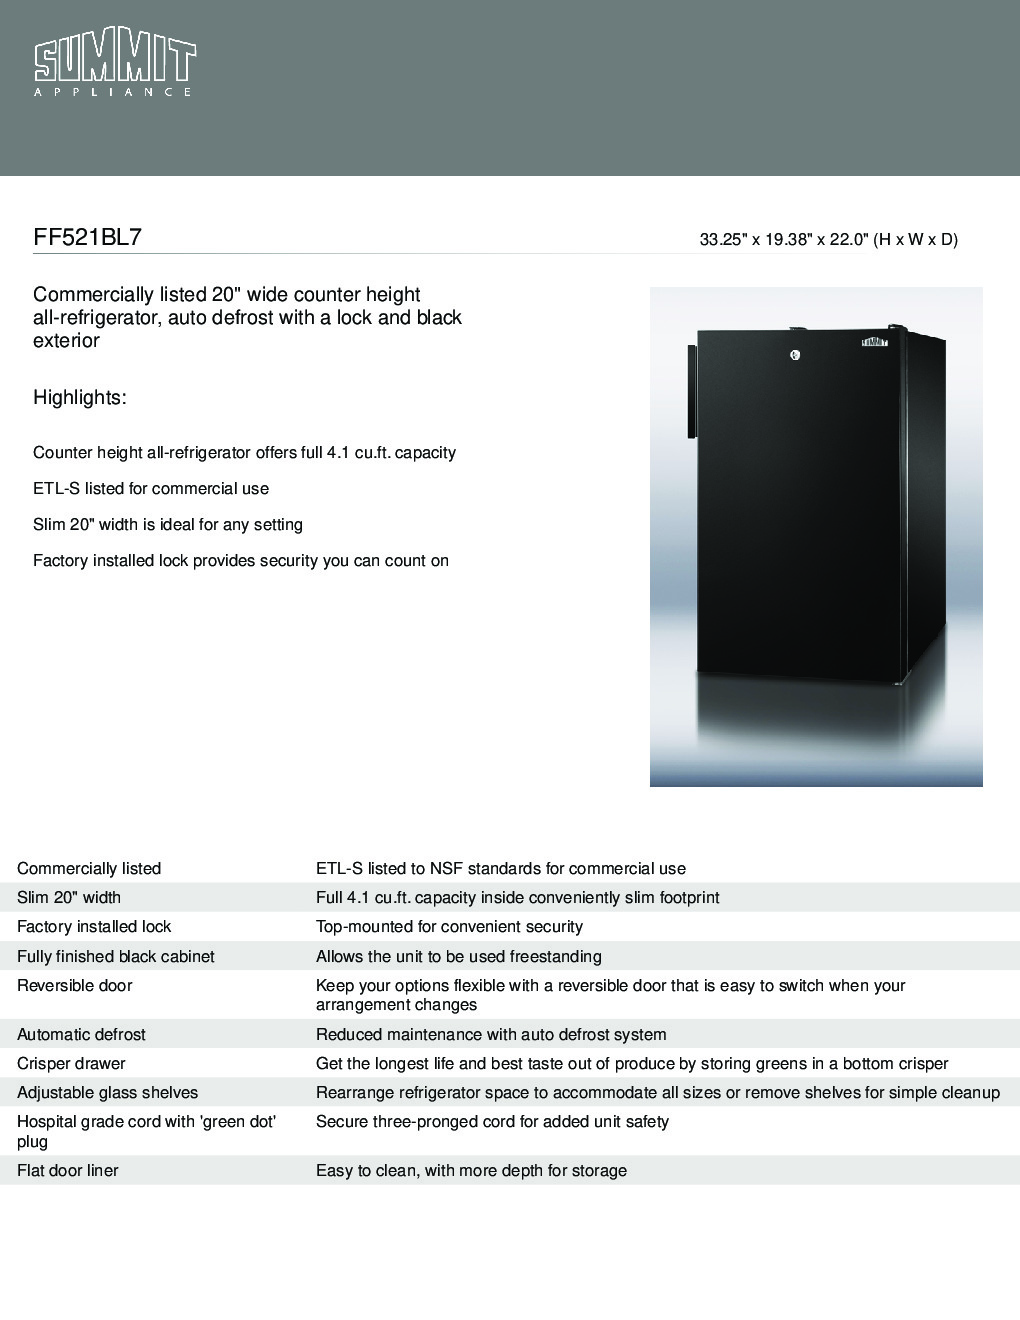 Summit FF521BL7 Reach-In Undercounter Refrigerator